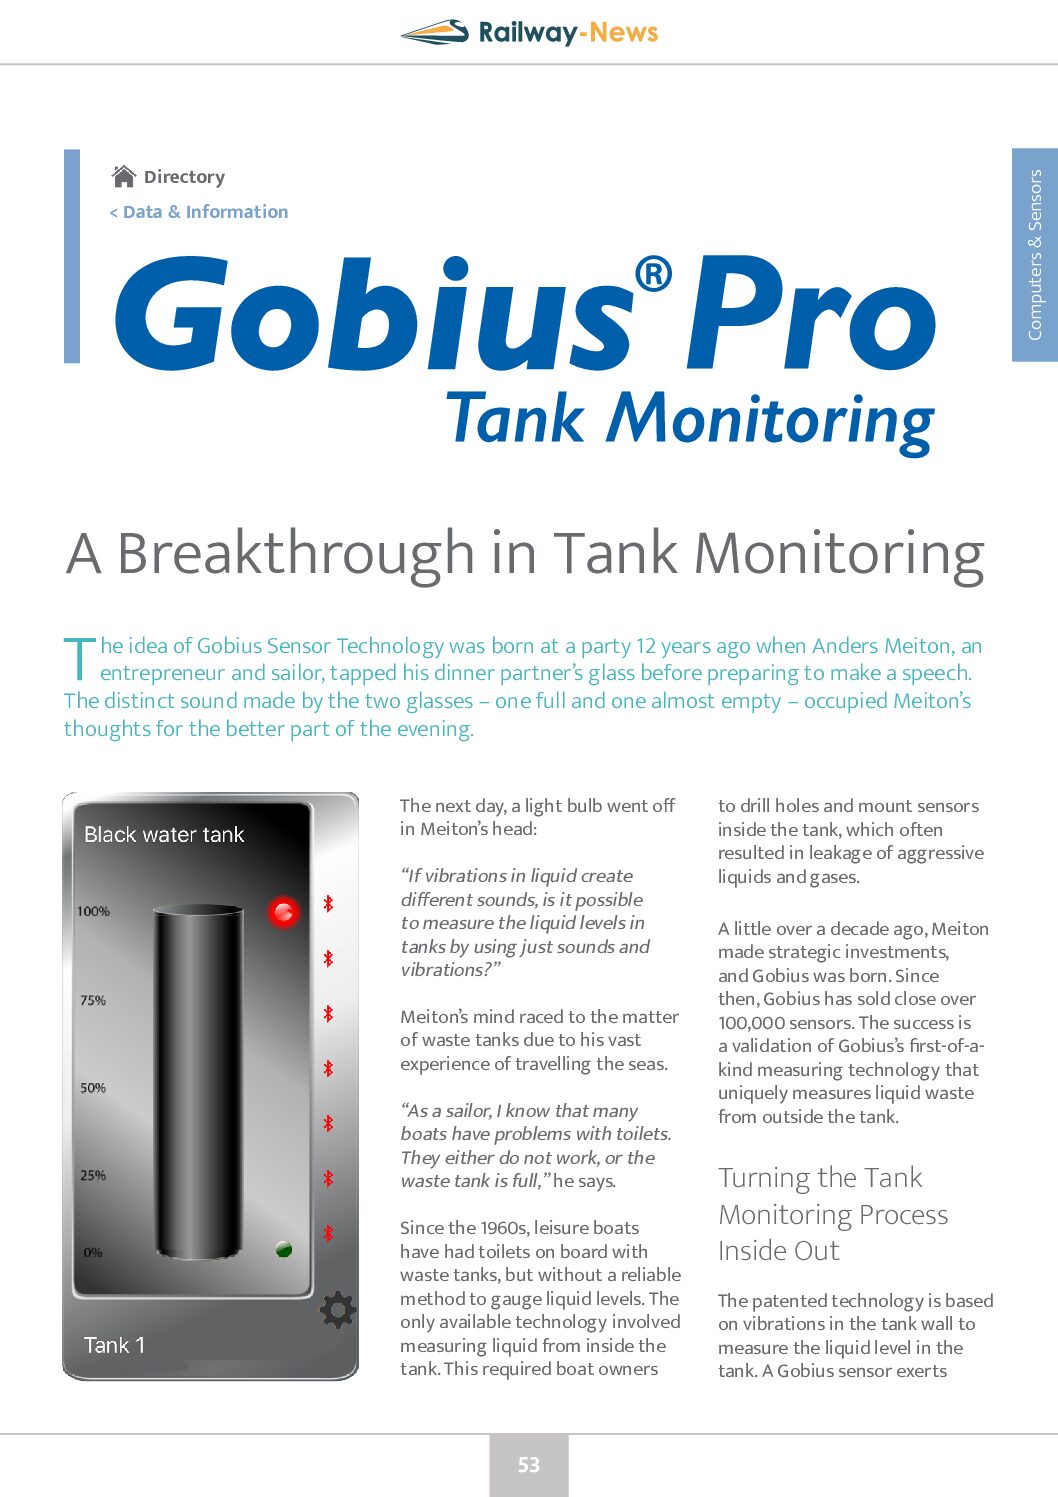 Gobius Pro – A Breakthrough in Tank Monitoring